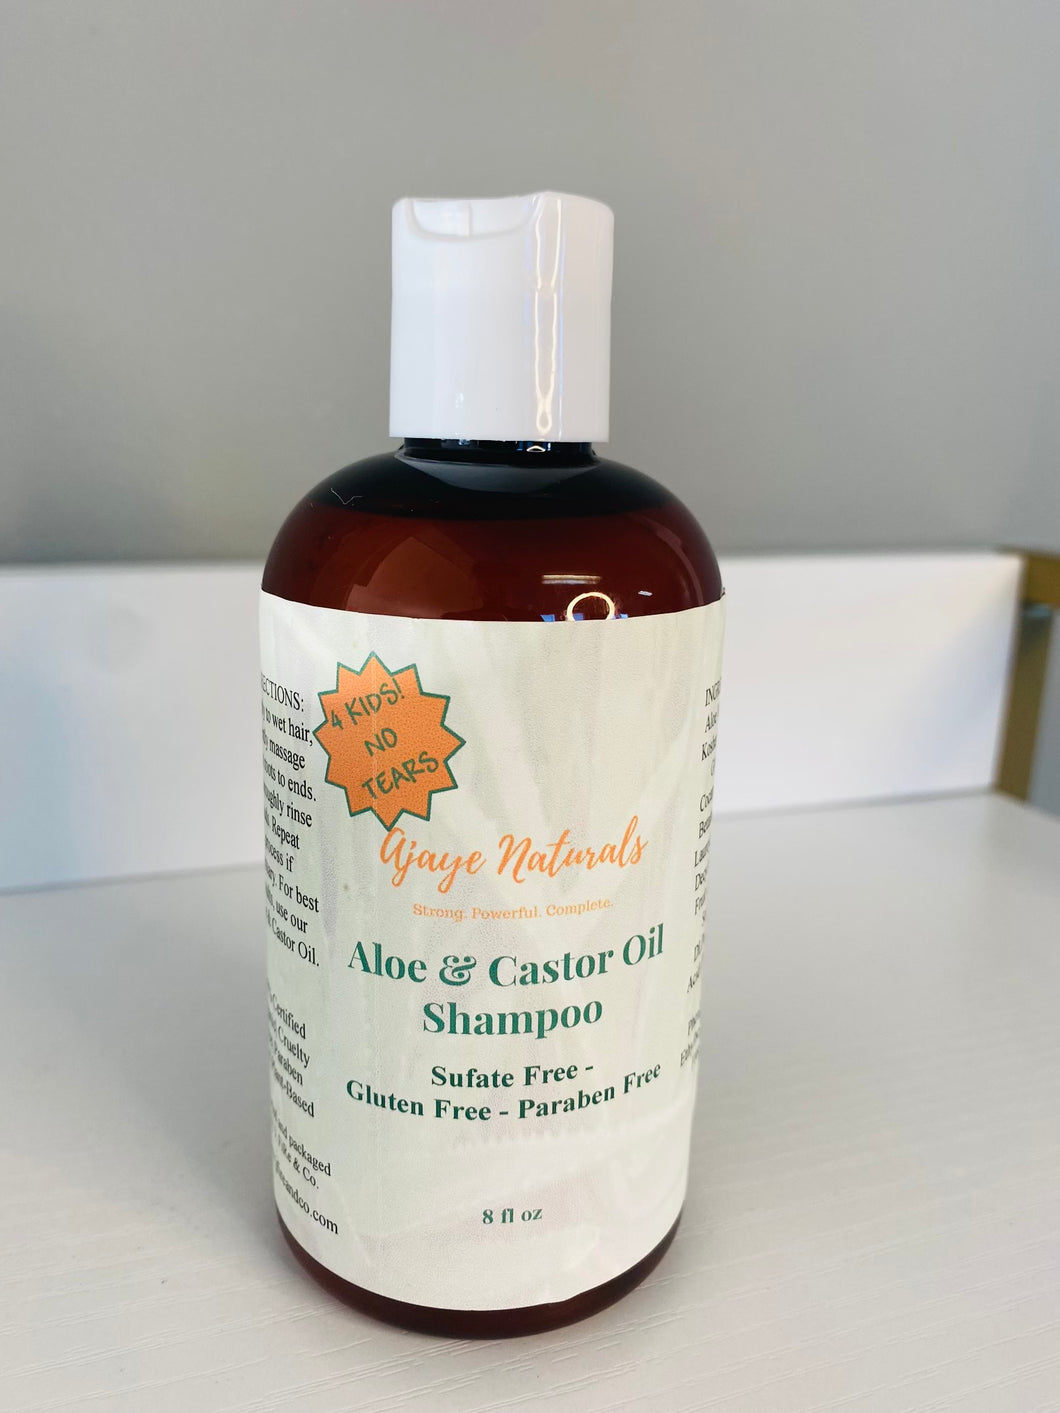 4Kids Aloe & Castor Oil Shampoo